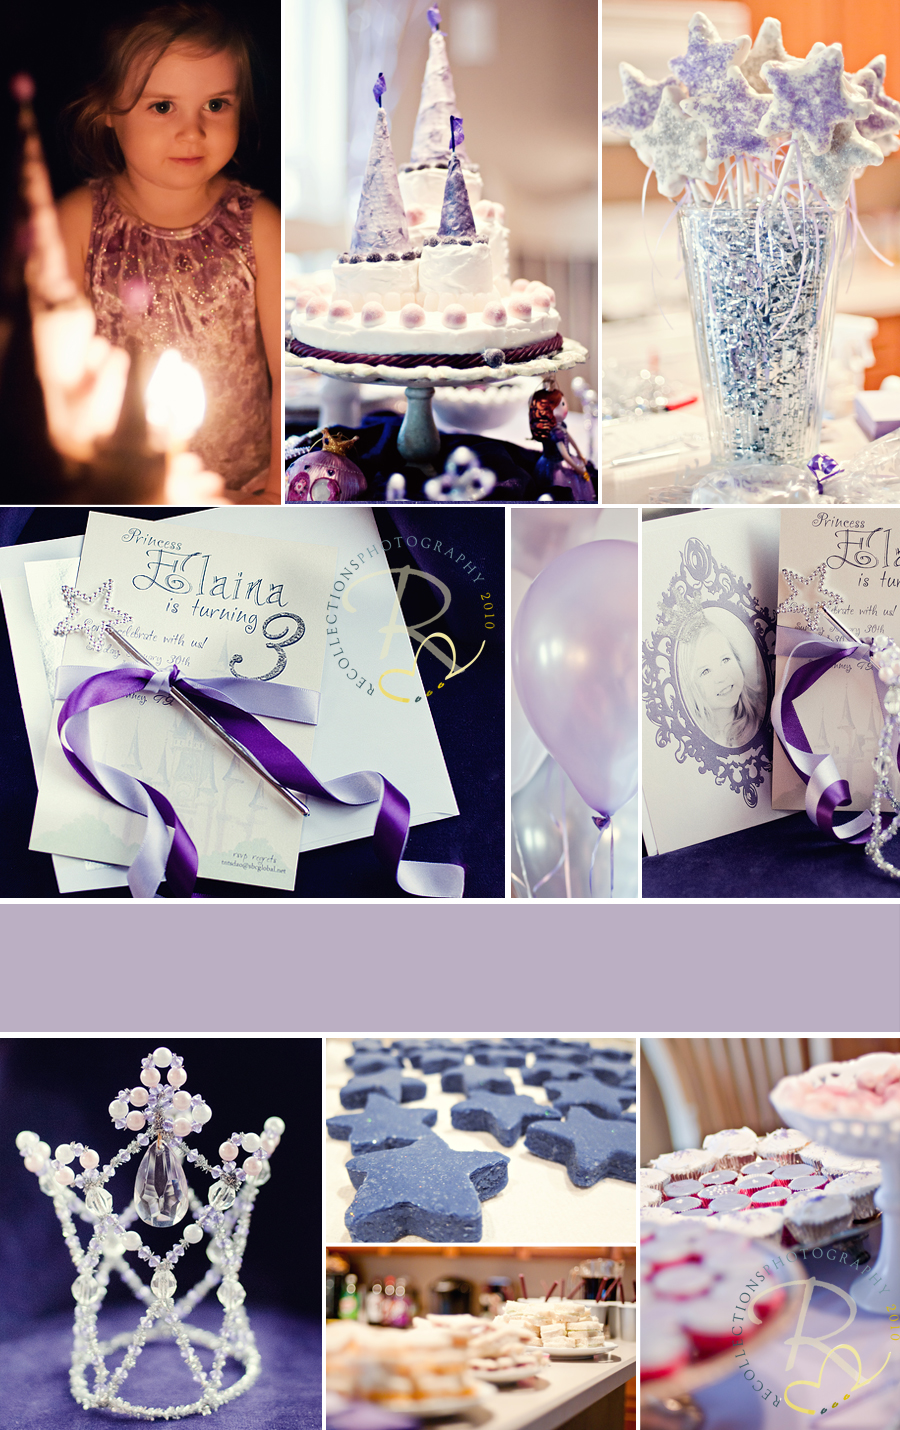 http://2.bp.blogspot.com/_PJJbdjaQBTI/TUoyqmvbftI/AAAAAAAACo4/UnxkUUXOLVA/s1600/purple_princess_party_photography_birthday.jpg